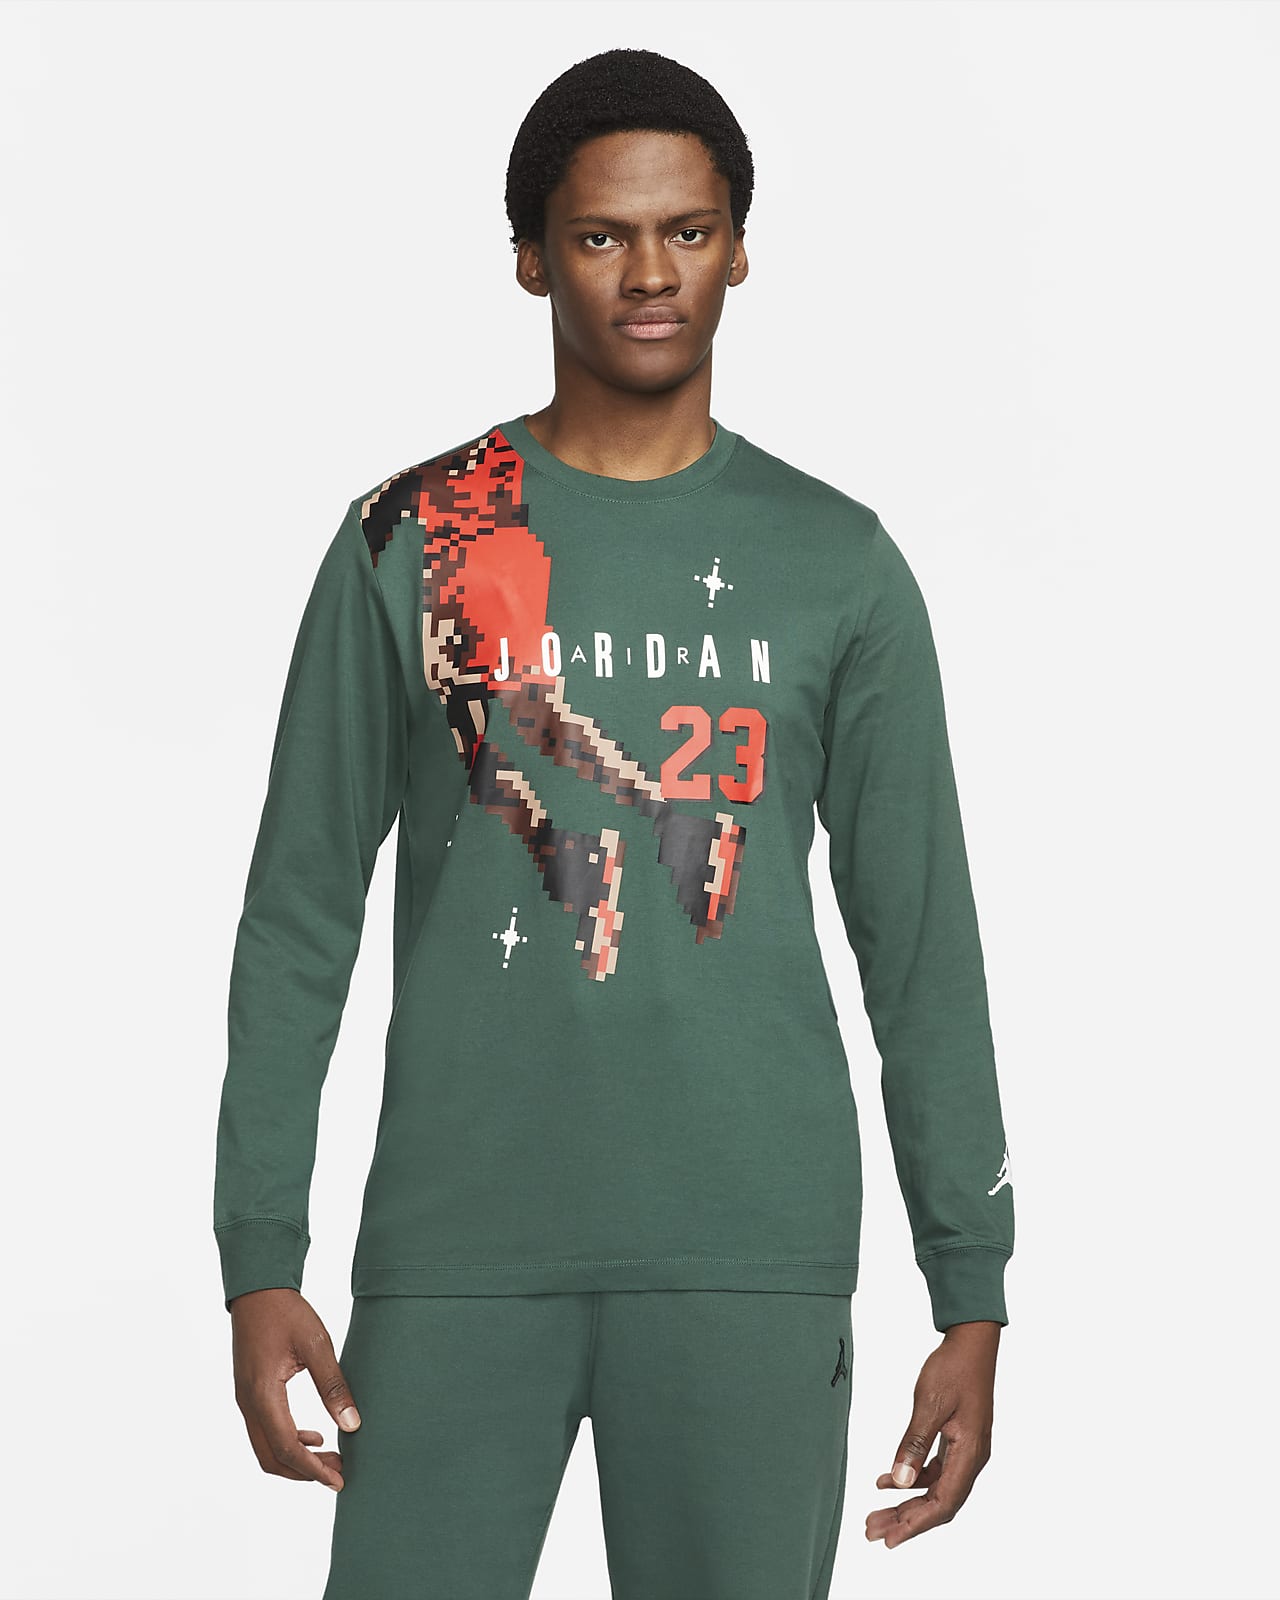 Jordan Brand Holiday Men's Long-Sleeve T-Shirt